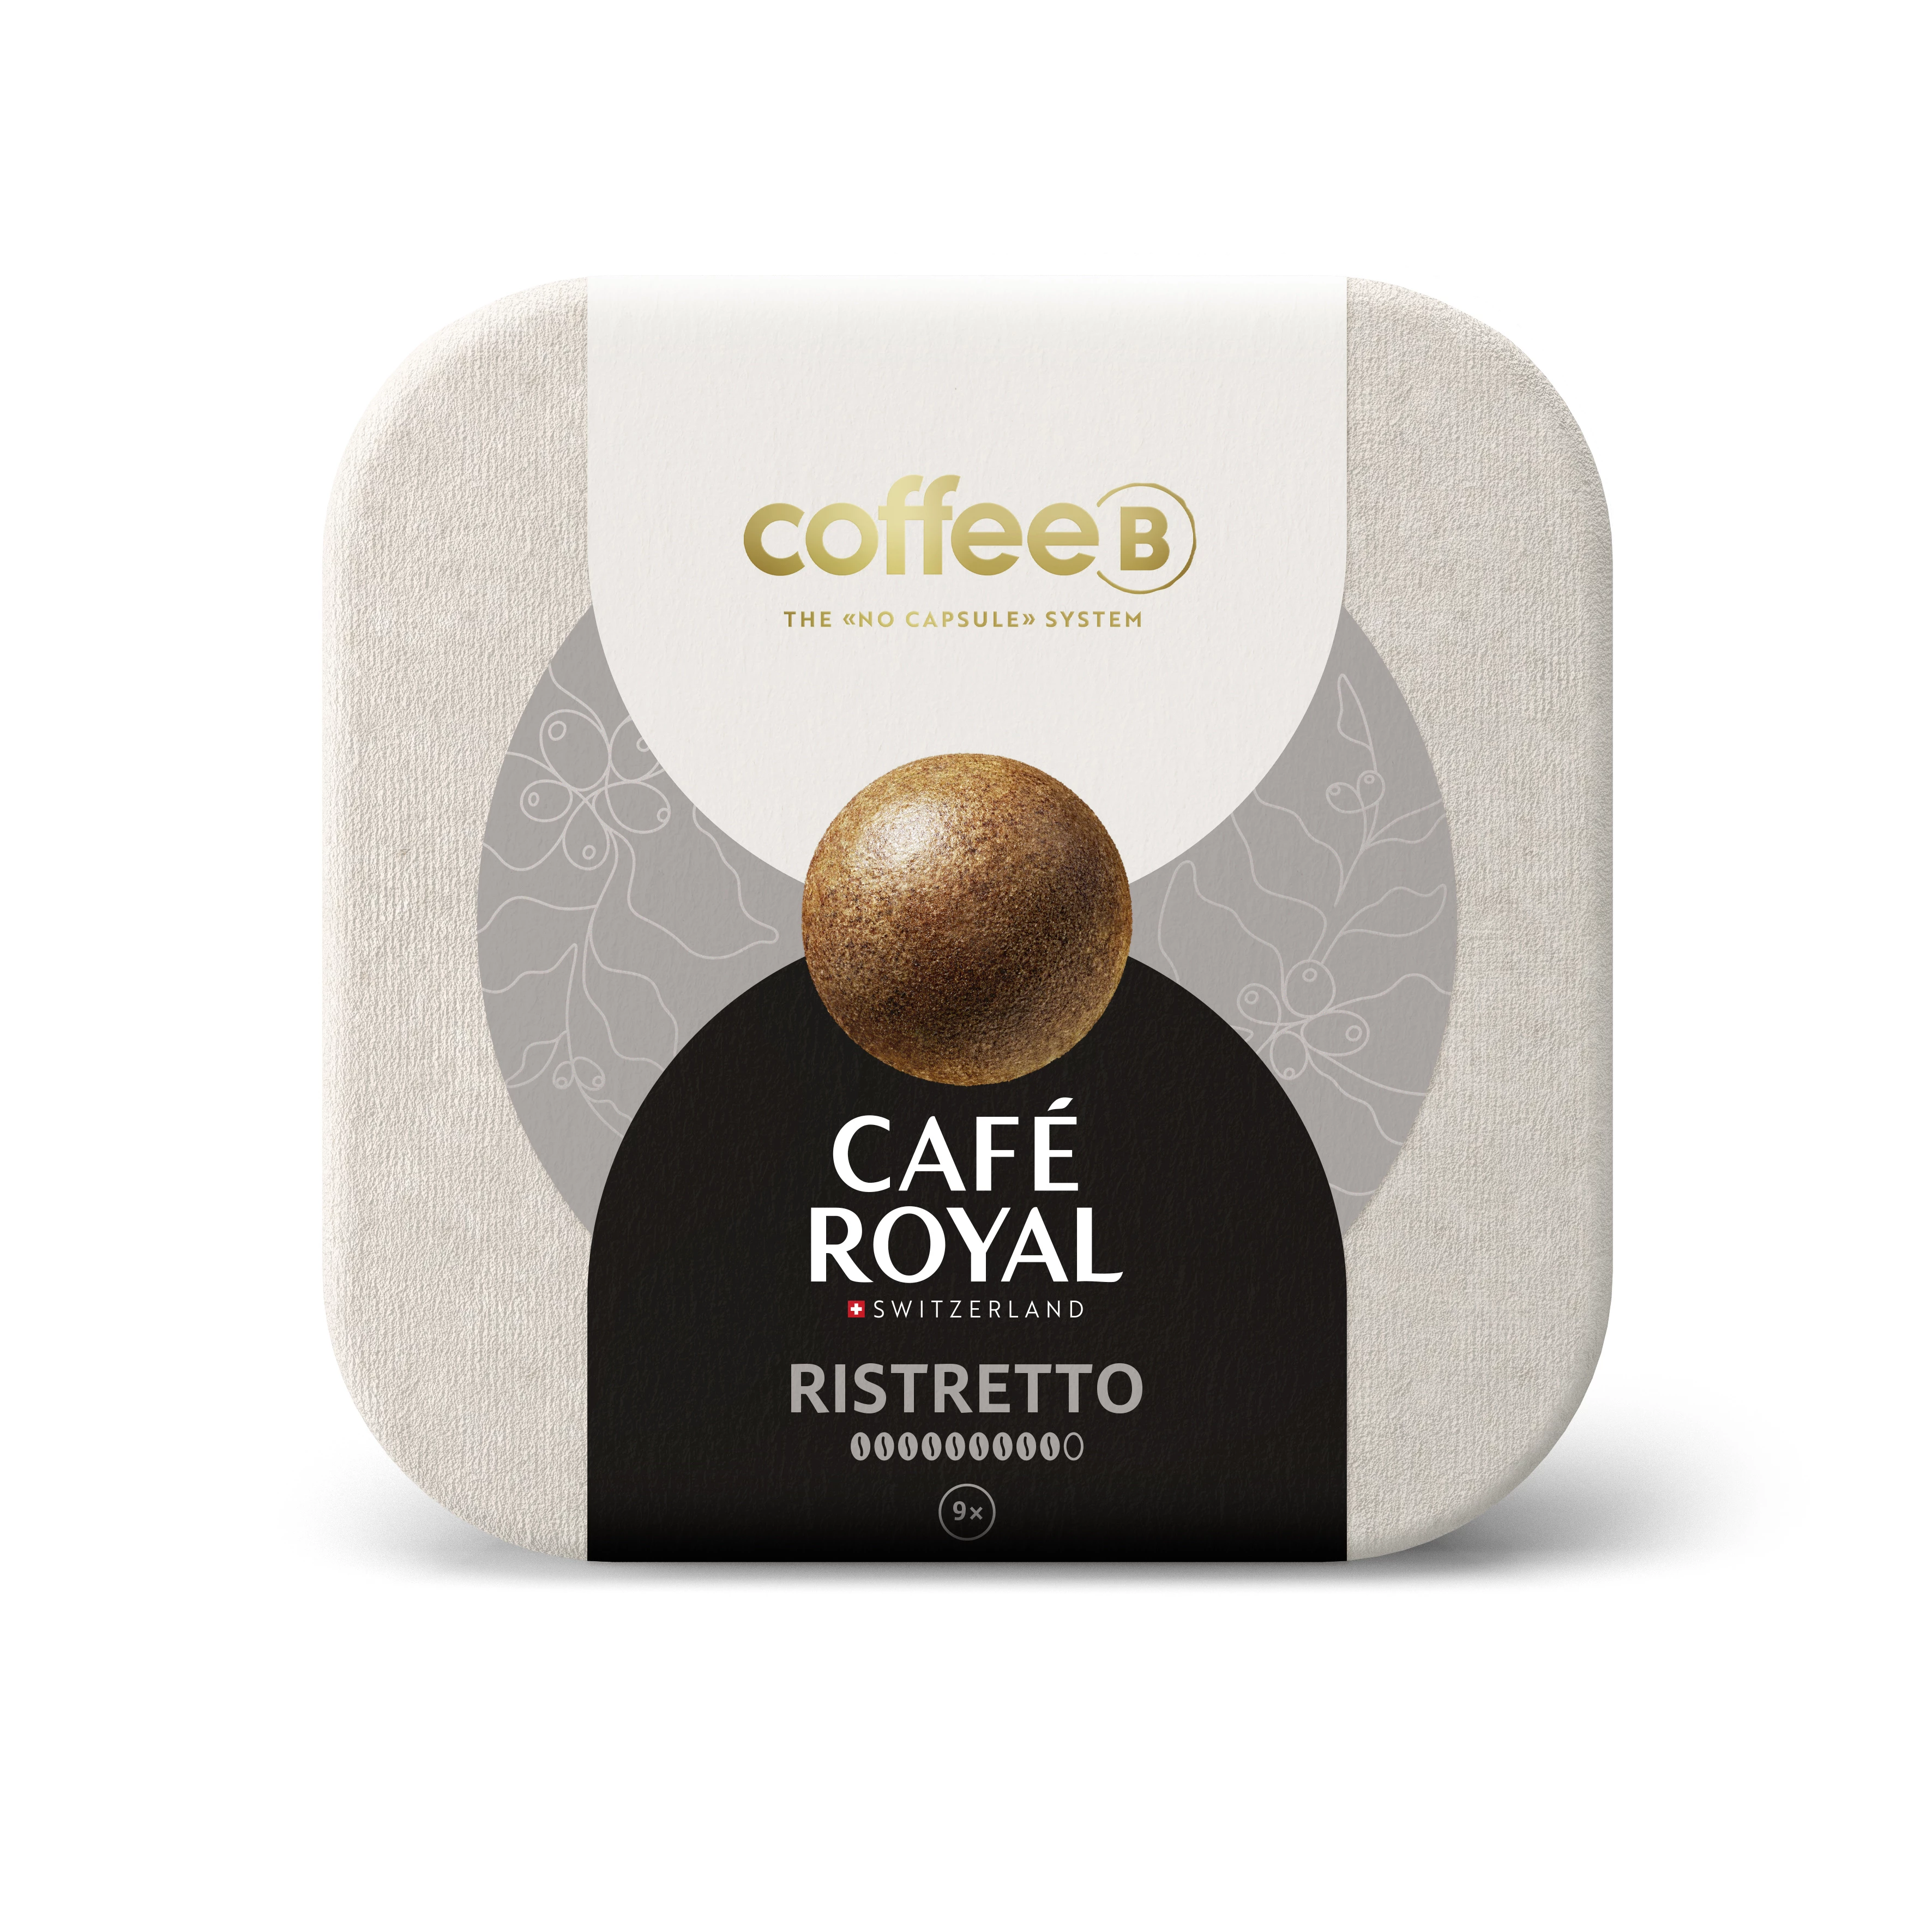 Boules Coffee B Ristretto; x9; 51g - CAFE ROYAL